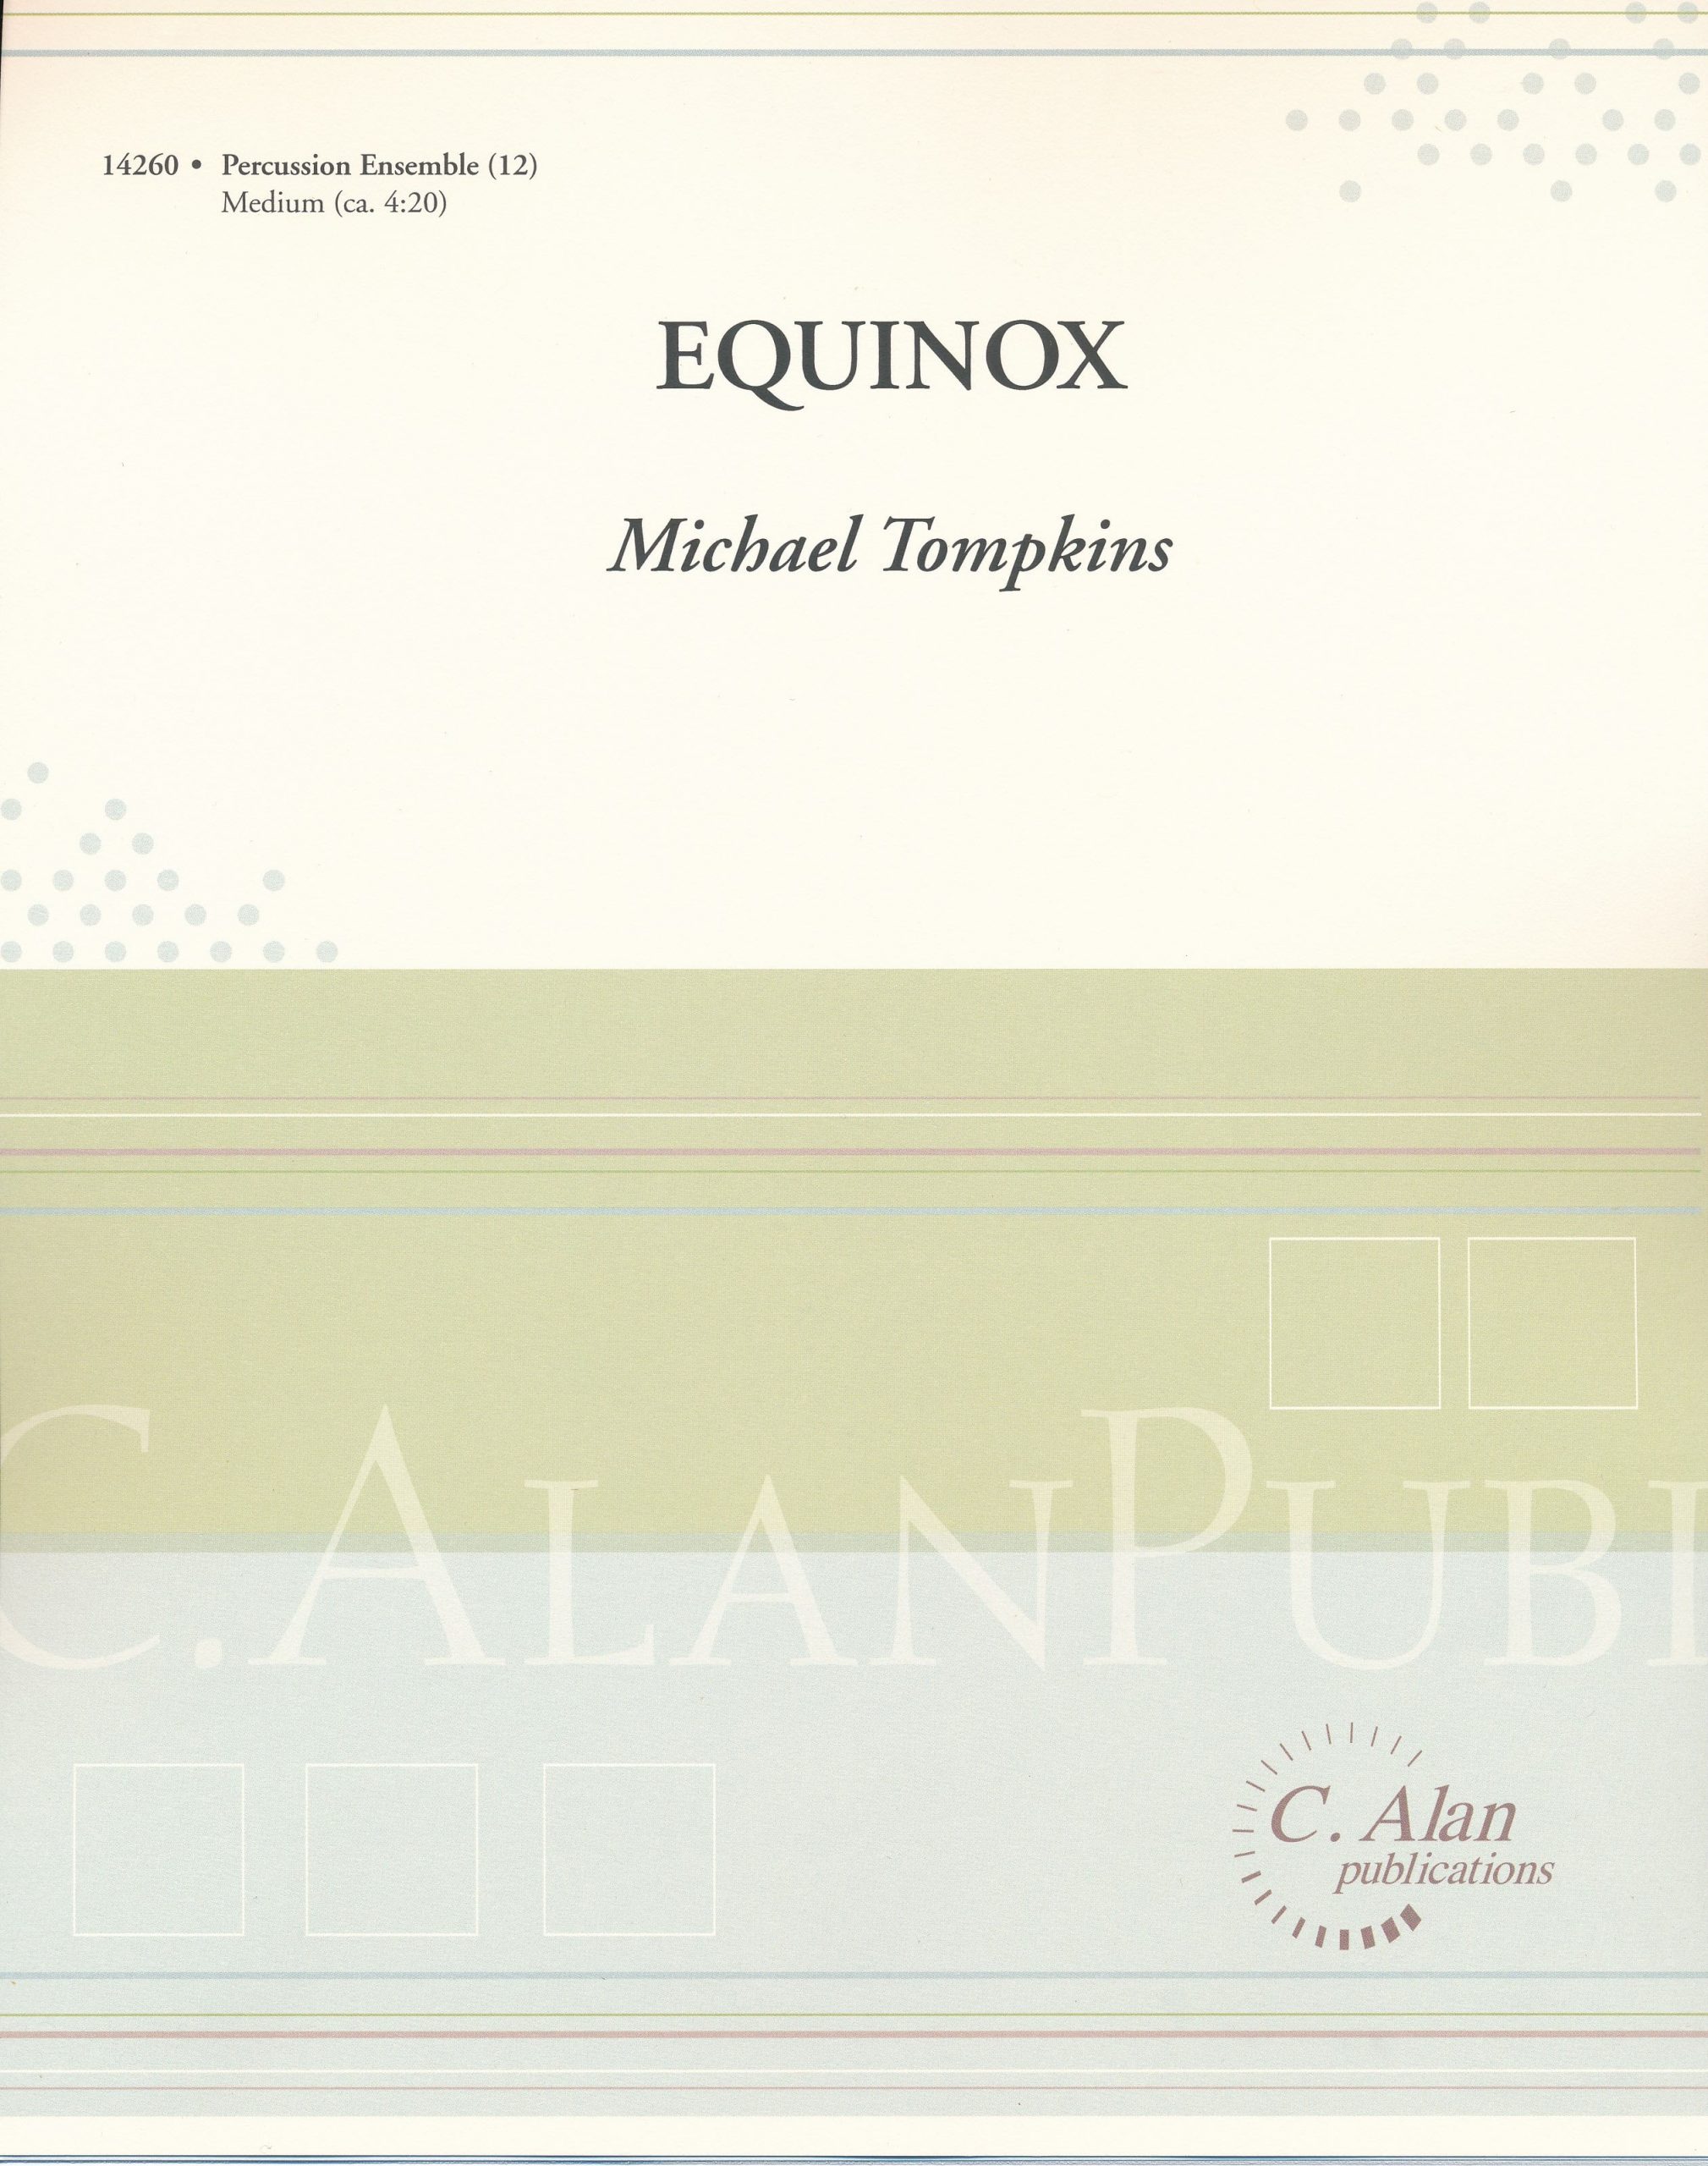 Equinox by Michael Tompkins